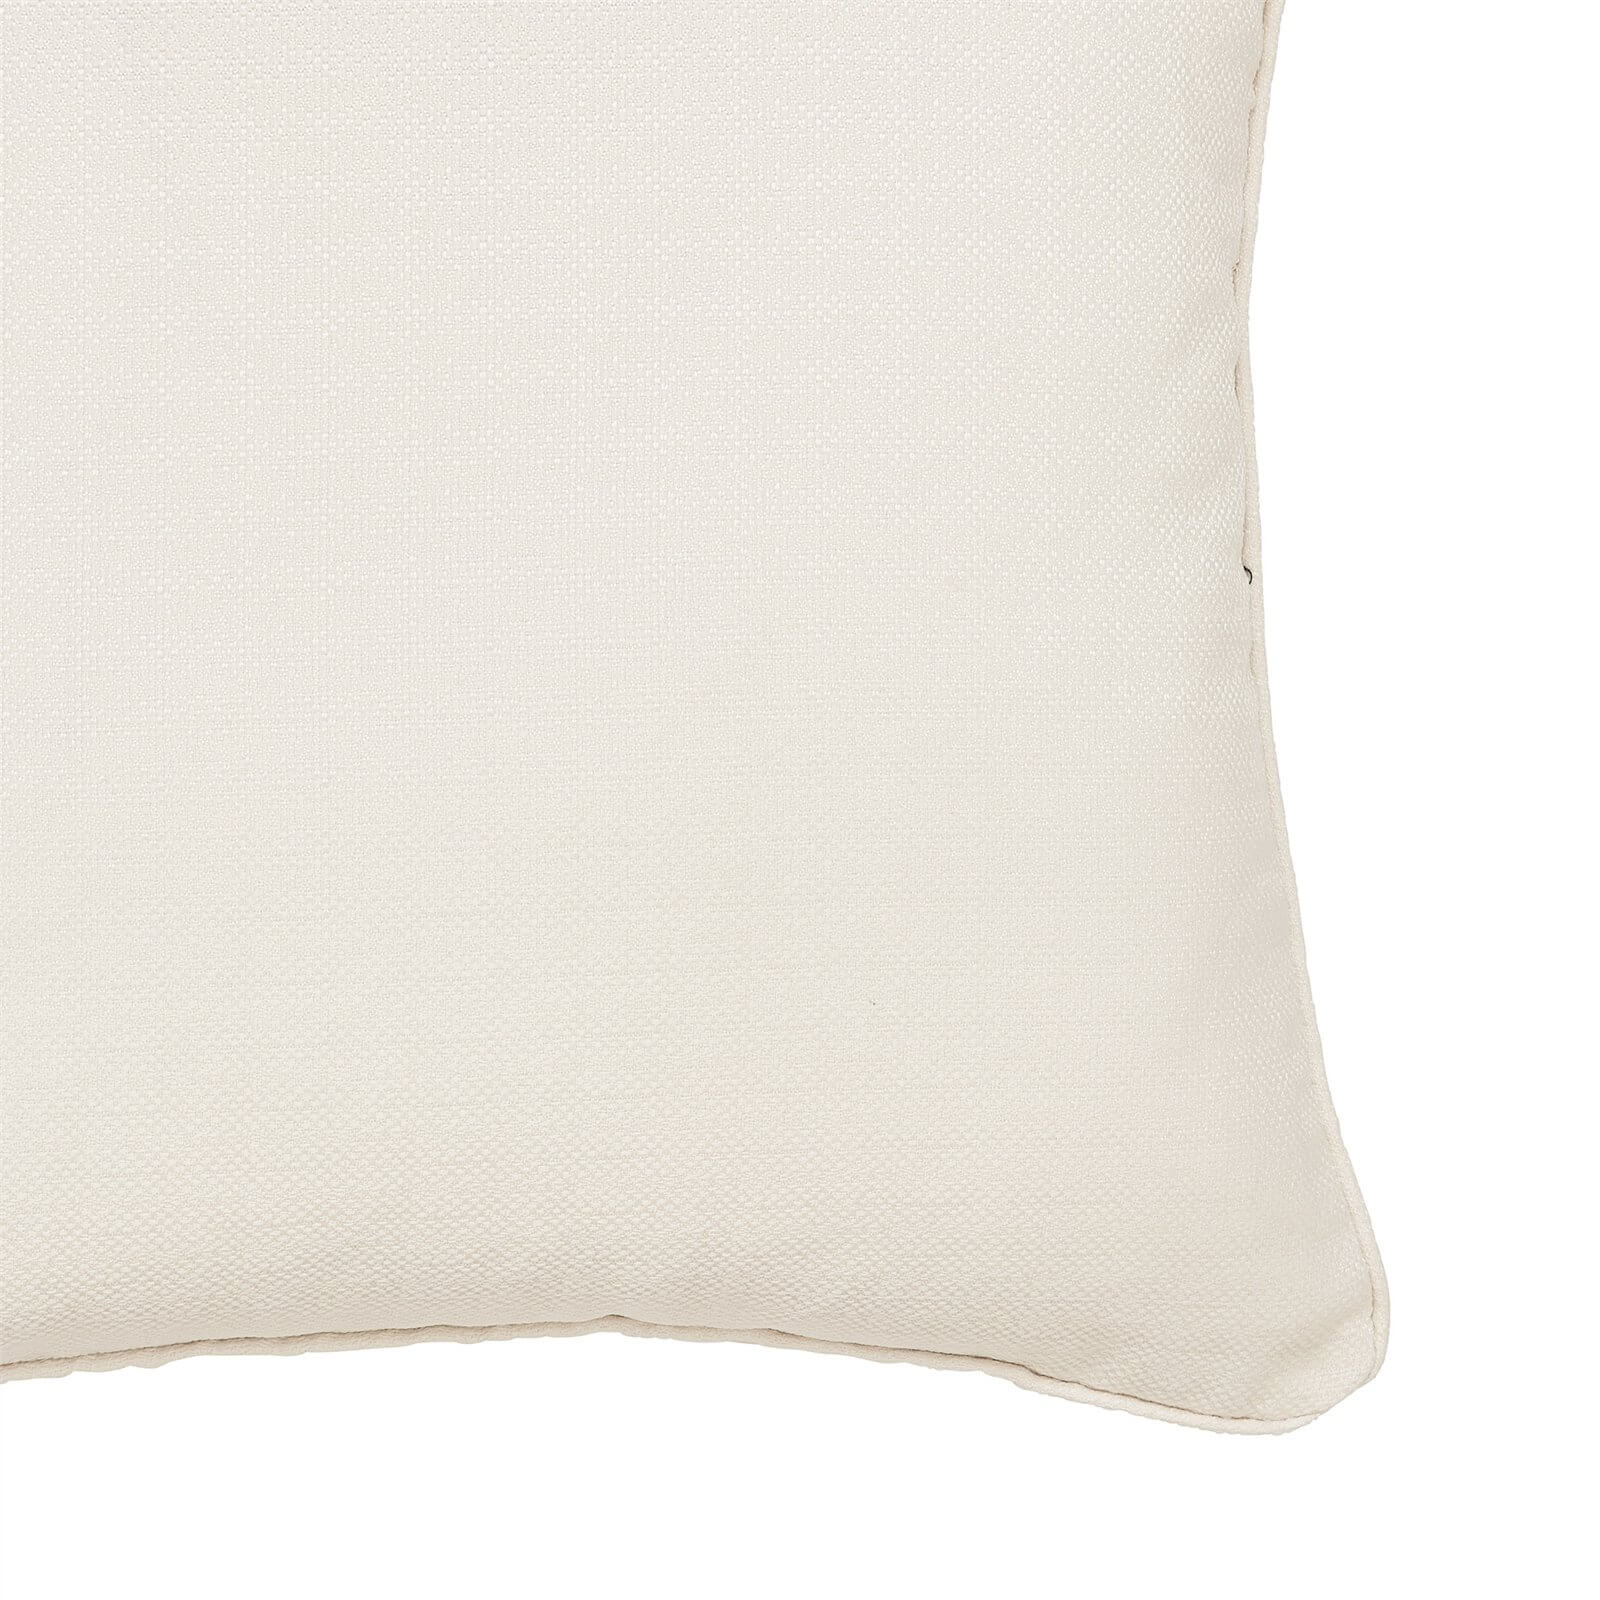 Helena Springfield Eden Cushions 45 x 45cm - Dove